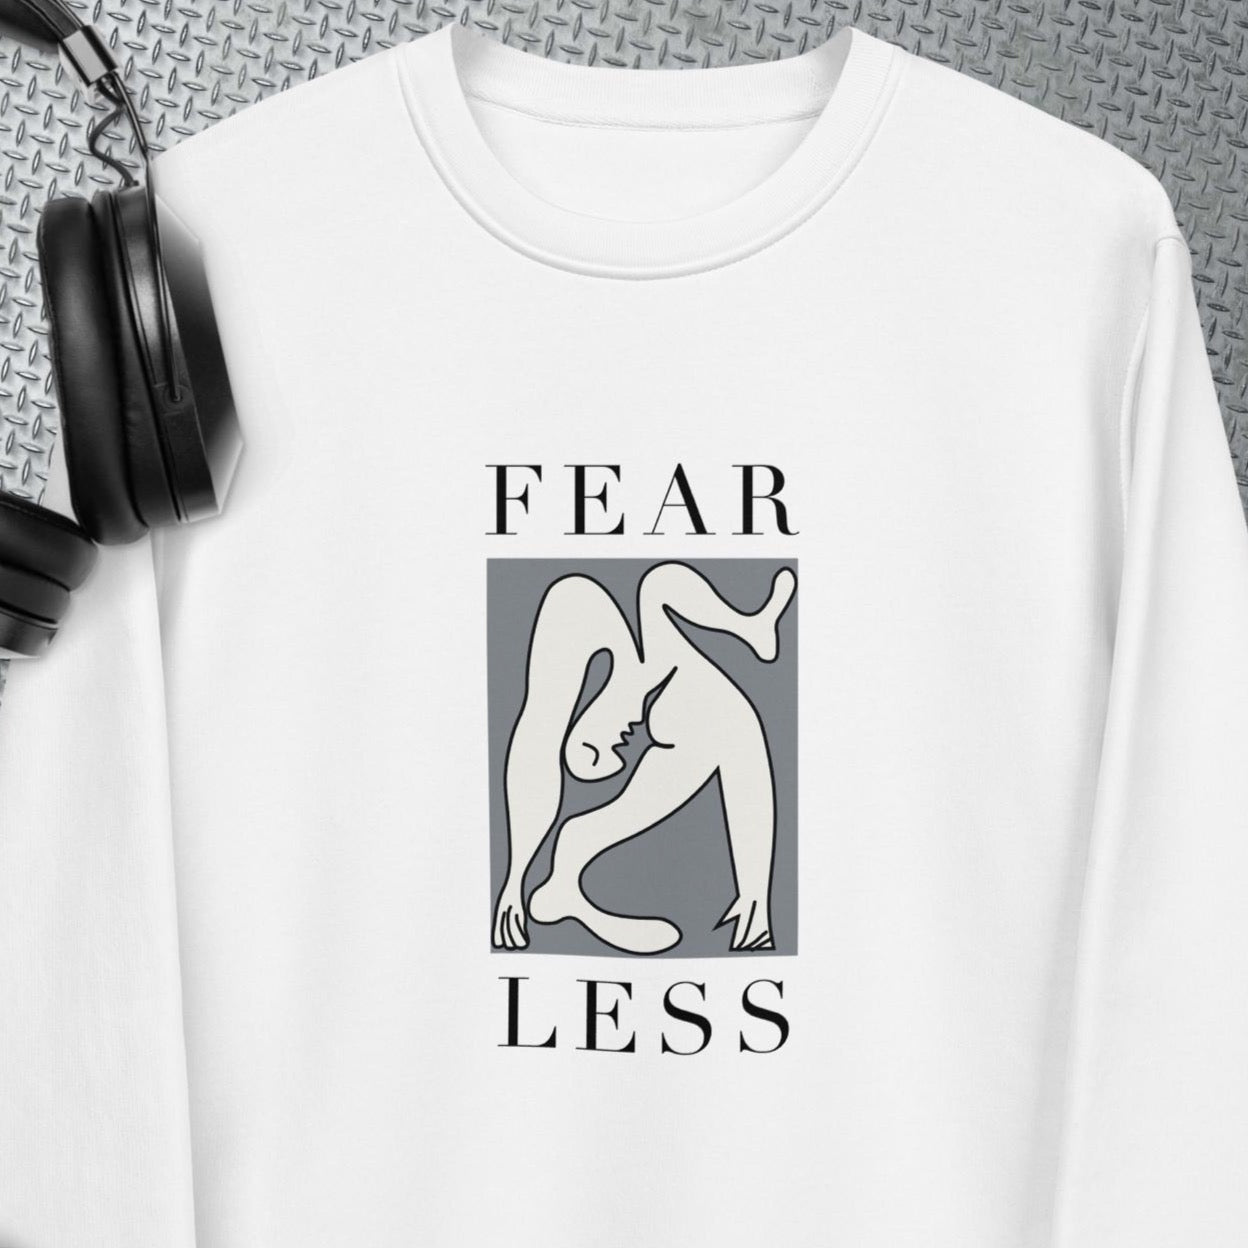 Feminist 'Fear Less' Organic Cotton Sweatshirt - Fearless Sweatshirt